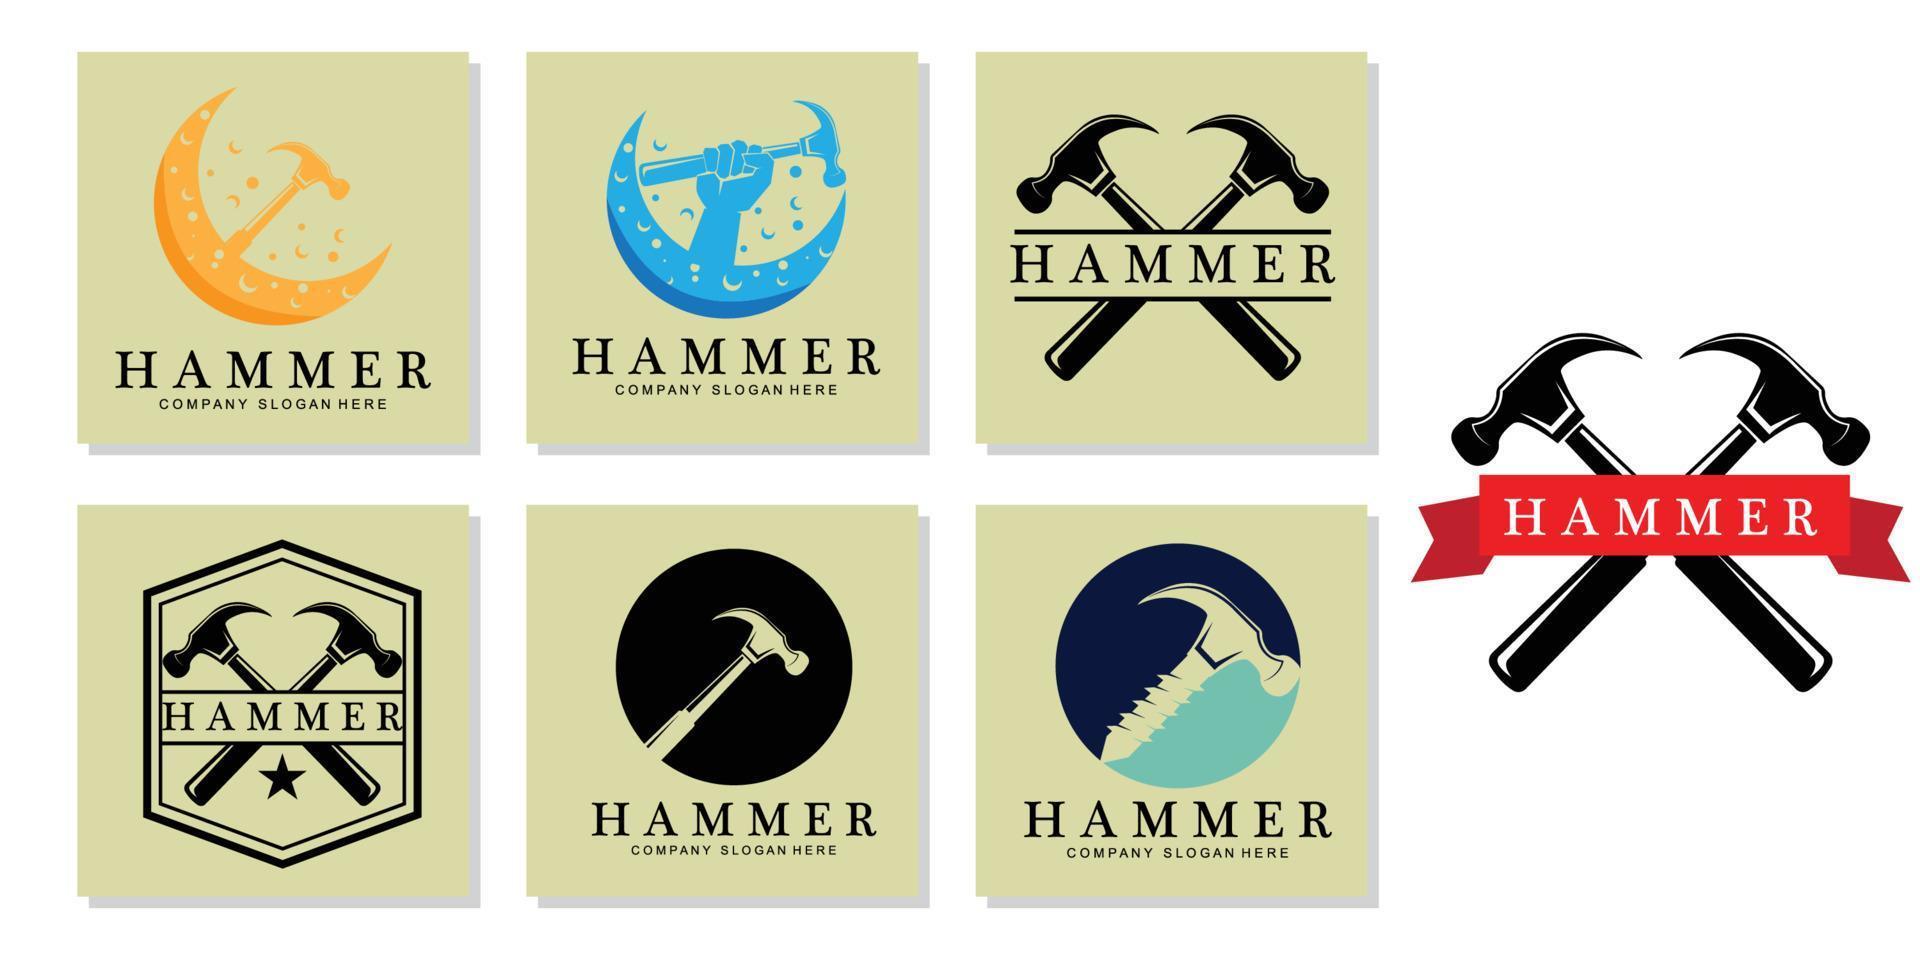 hammer, building construction tools and judge logo vector icon, vintage retro design illustration